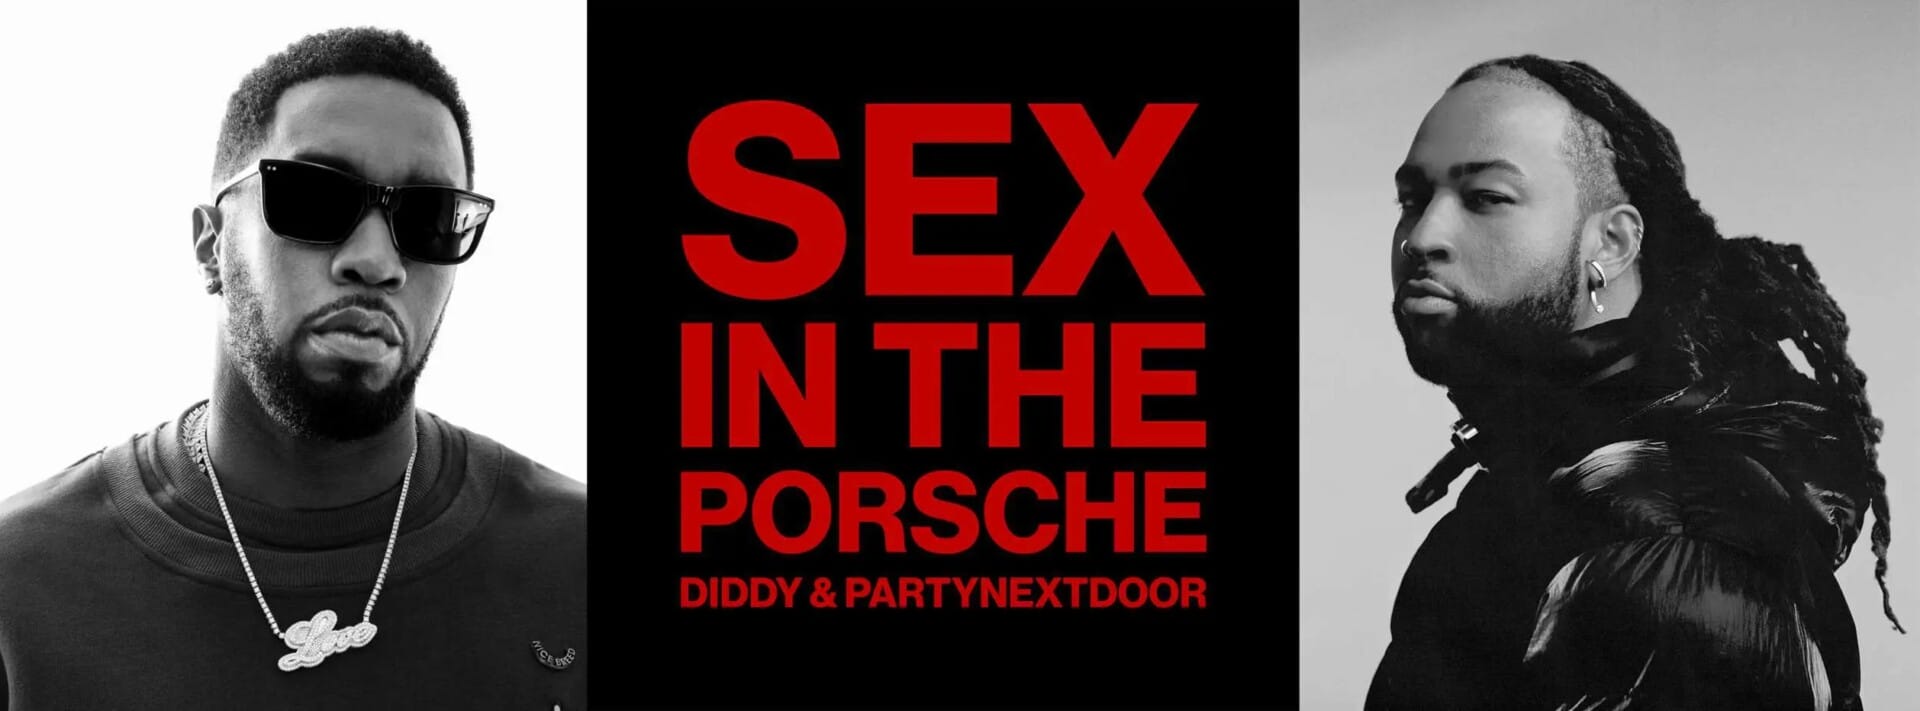 SEAN “DIDDY” COMBS & PARTYNEXTDOOR DROP SINGLE “SEX IN THE PORSCHE ”